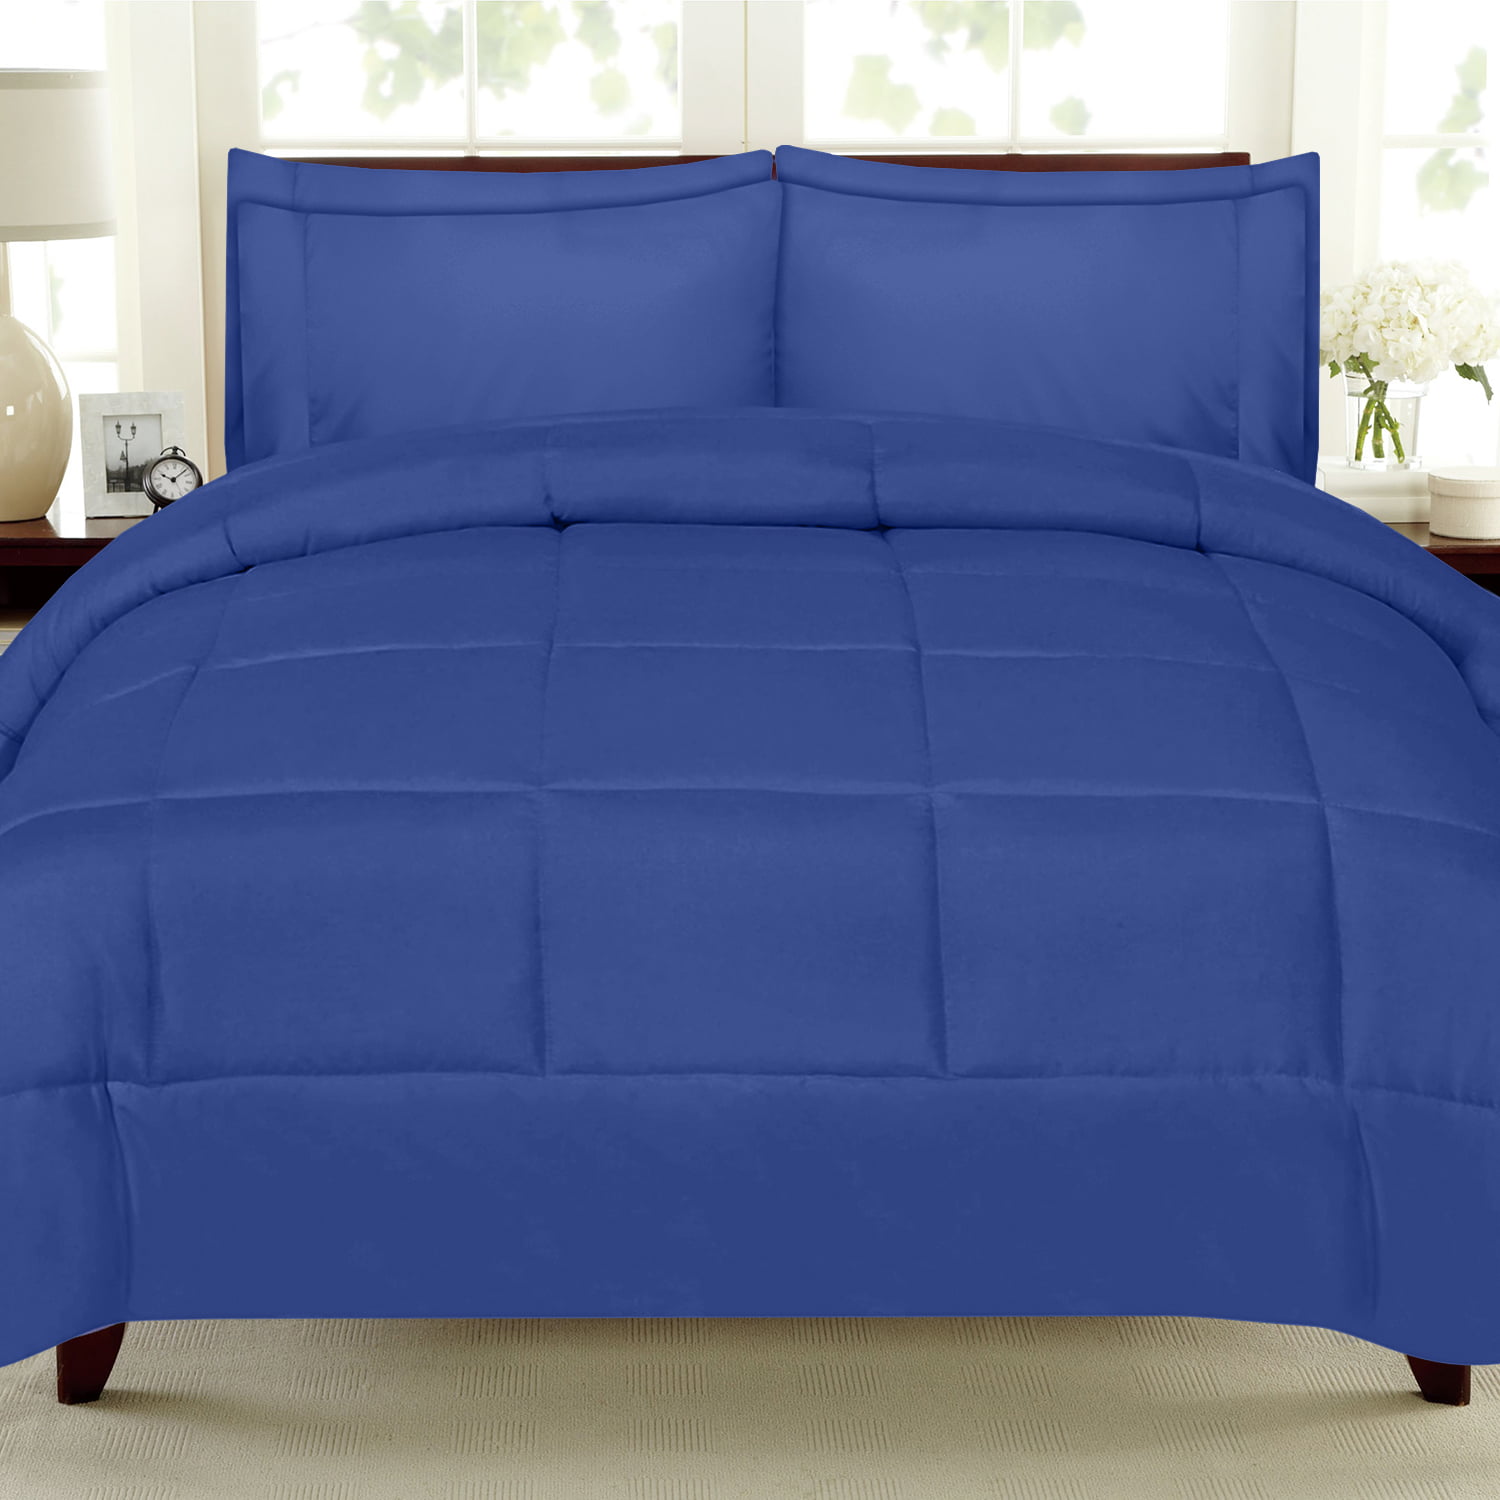 Luxury 7 Piece BedInABag Down Alternative Comforter And Sheet Set Royal Blue Full